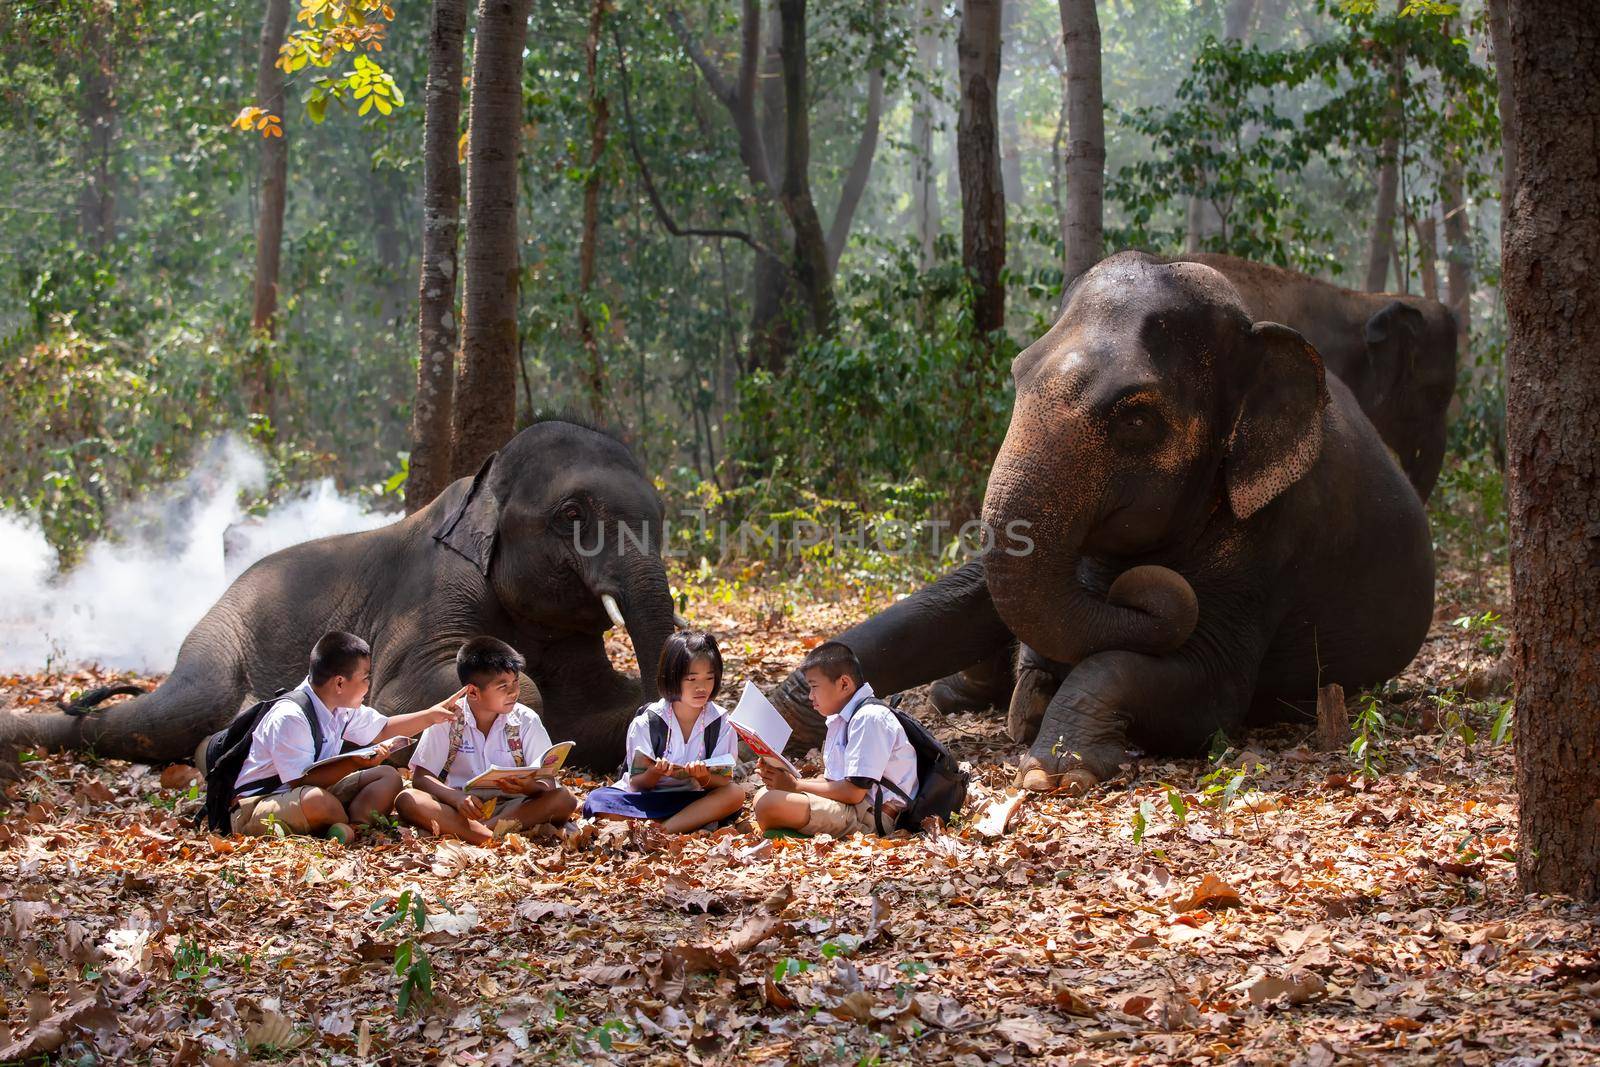 Students Walk To School Through Forest Alongside Elephants by chuanchai